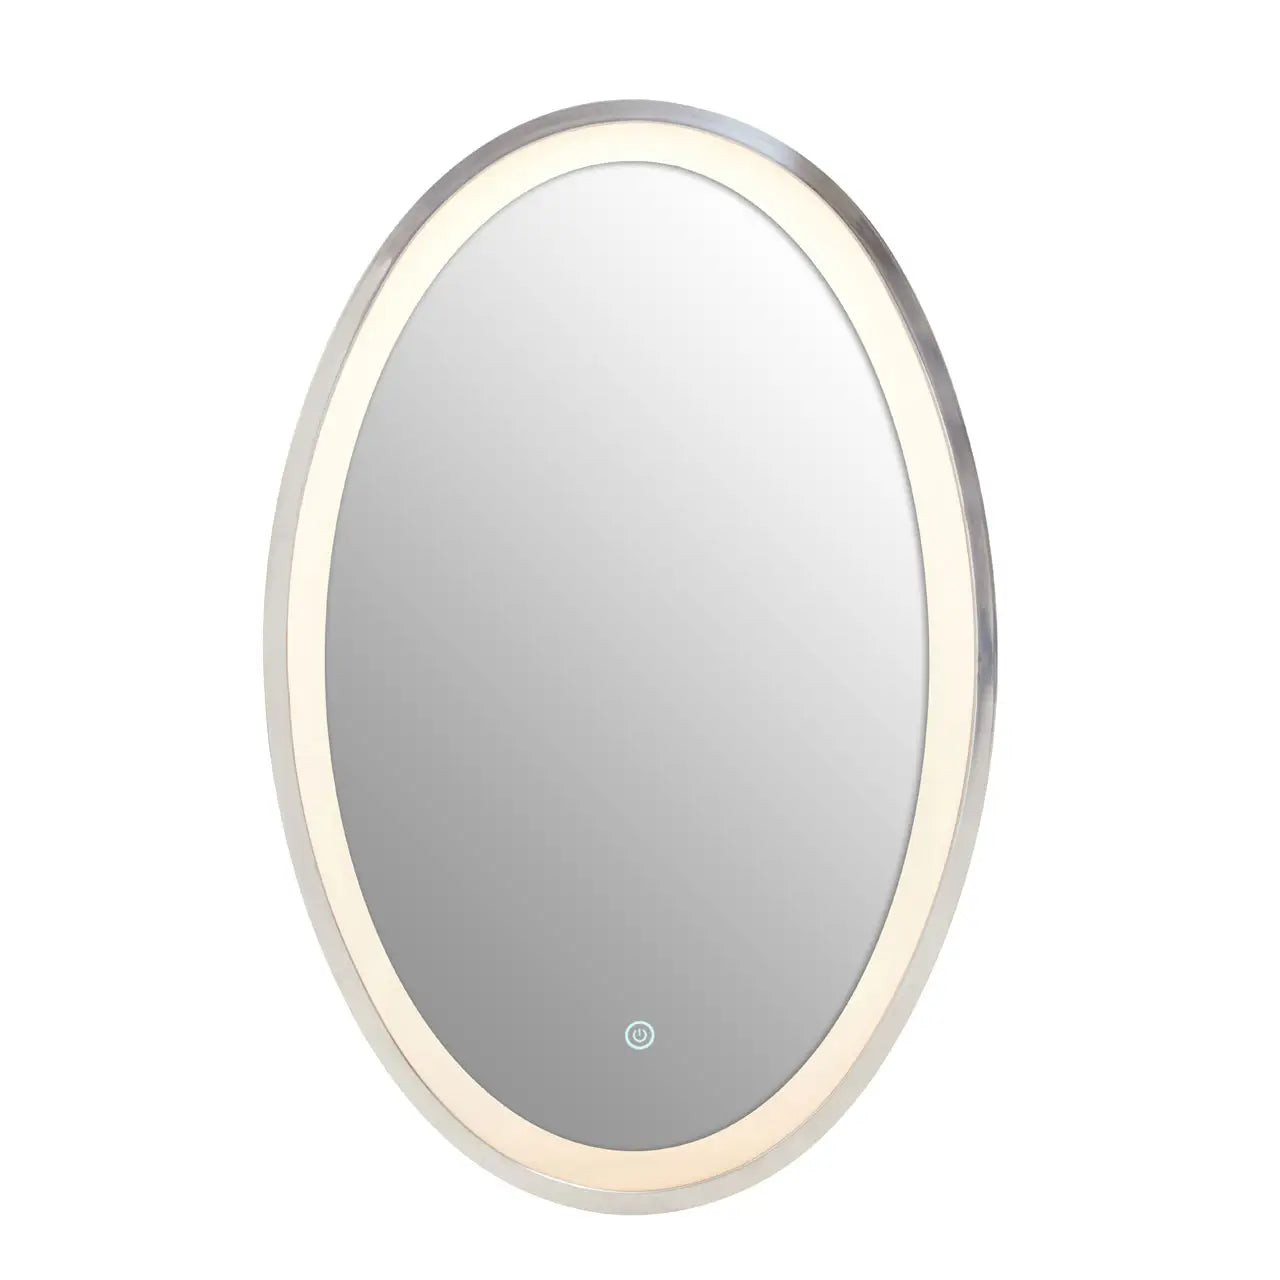 Avelino Illuminated Oval Bathroom Mirror - Silver